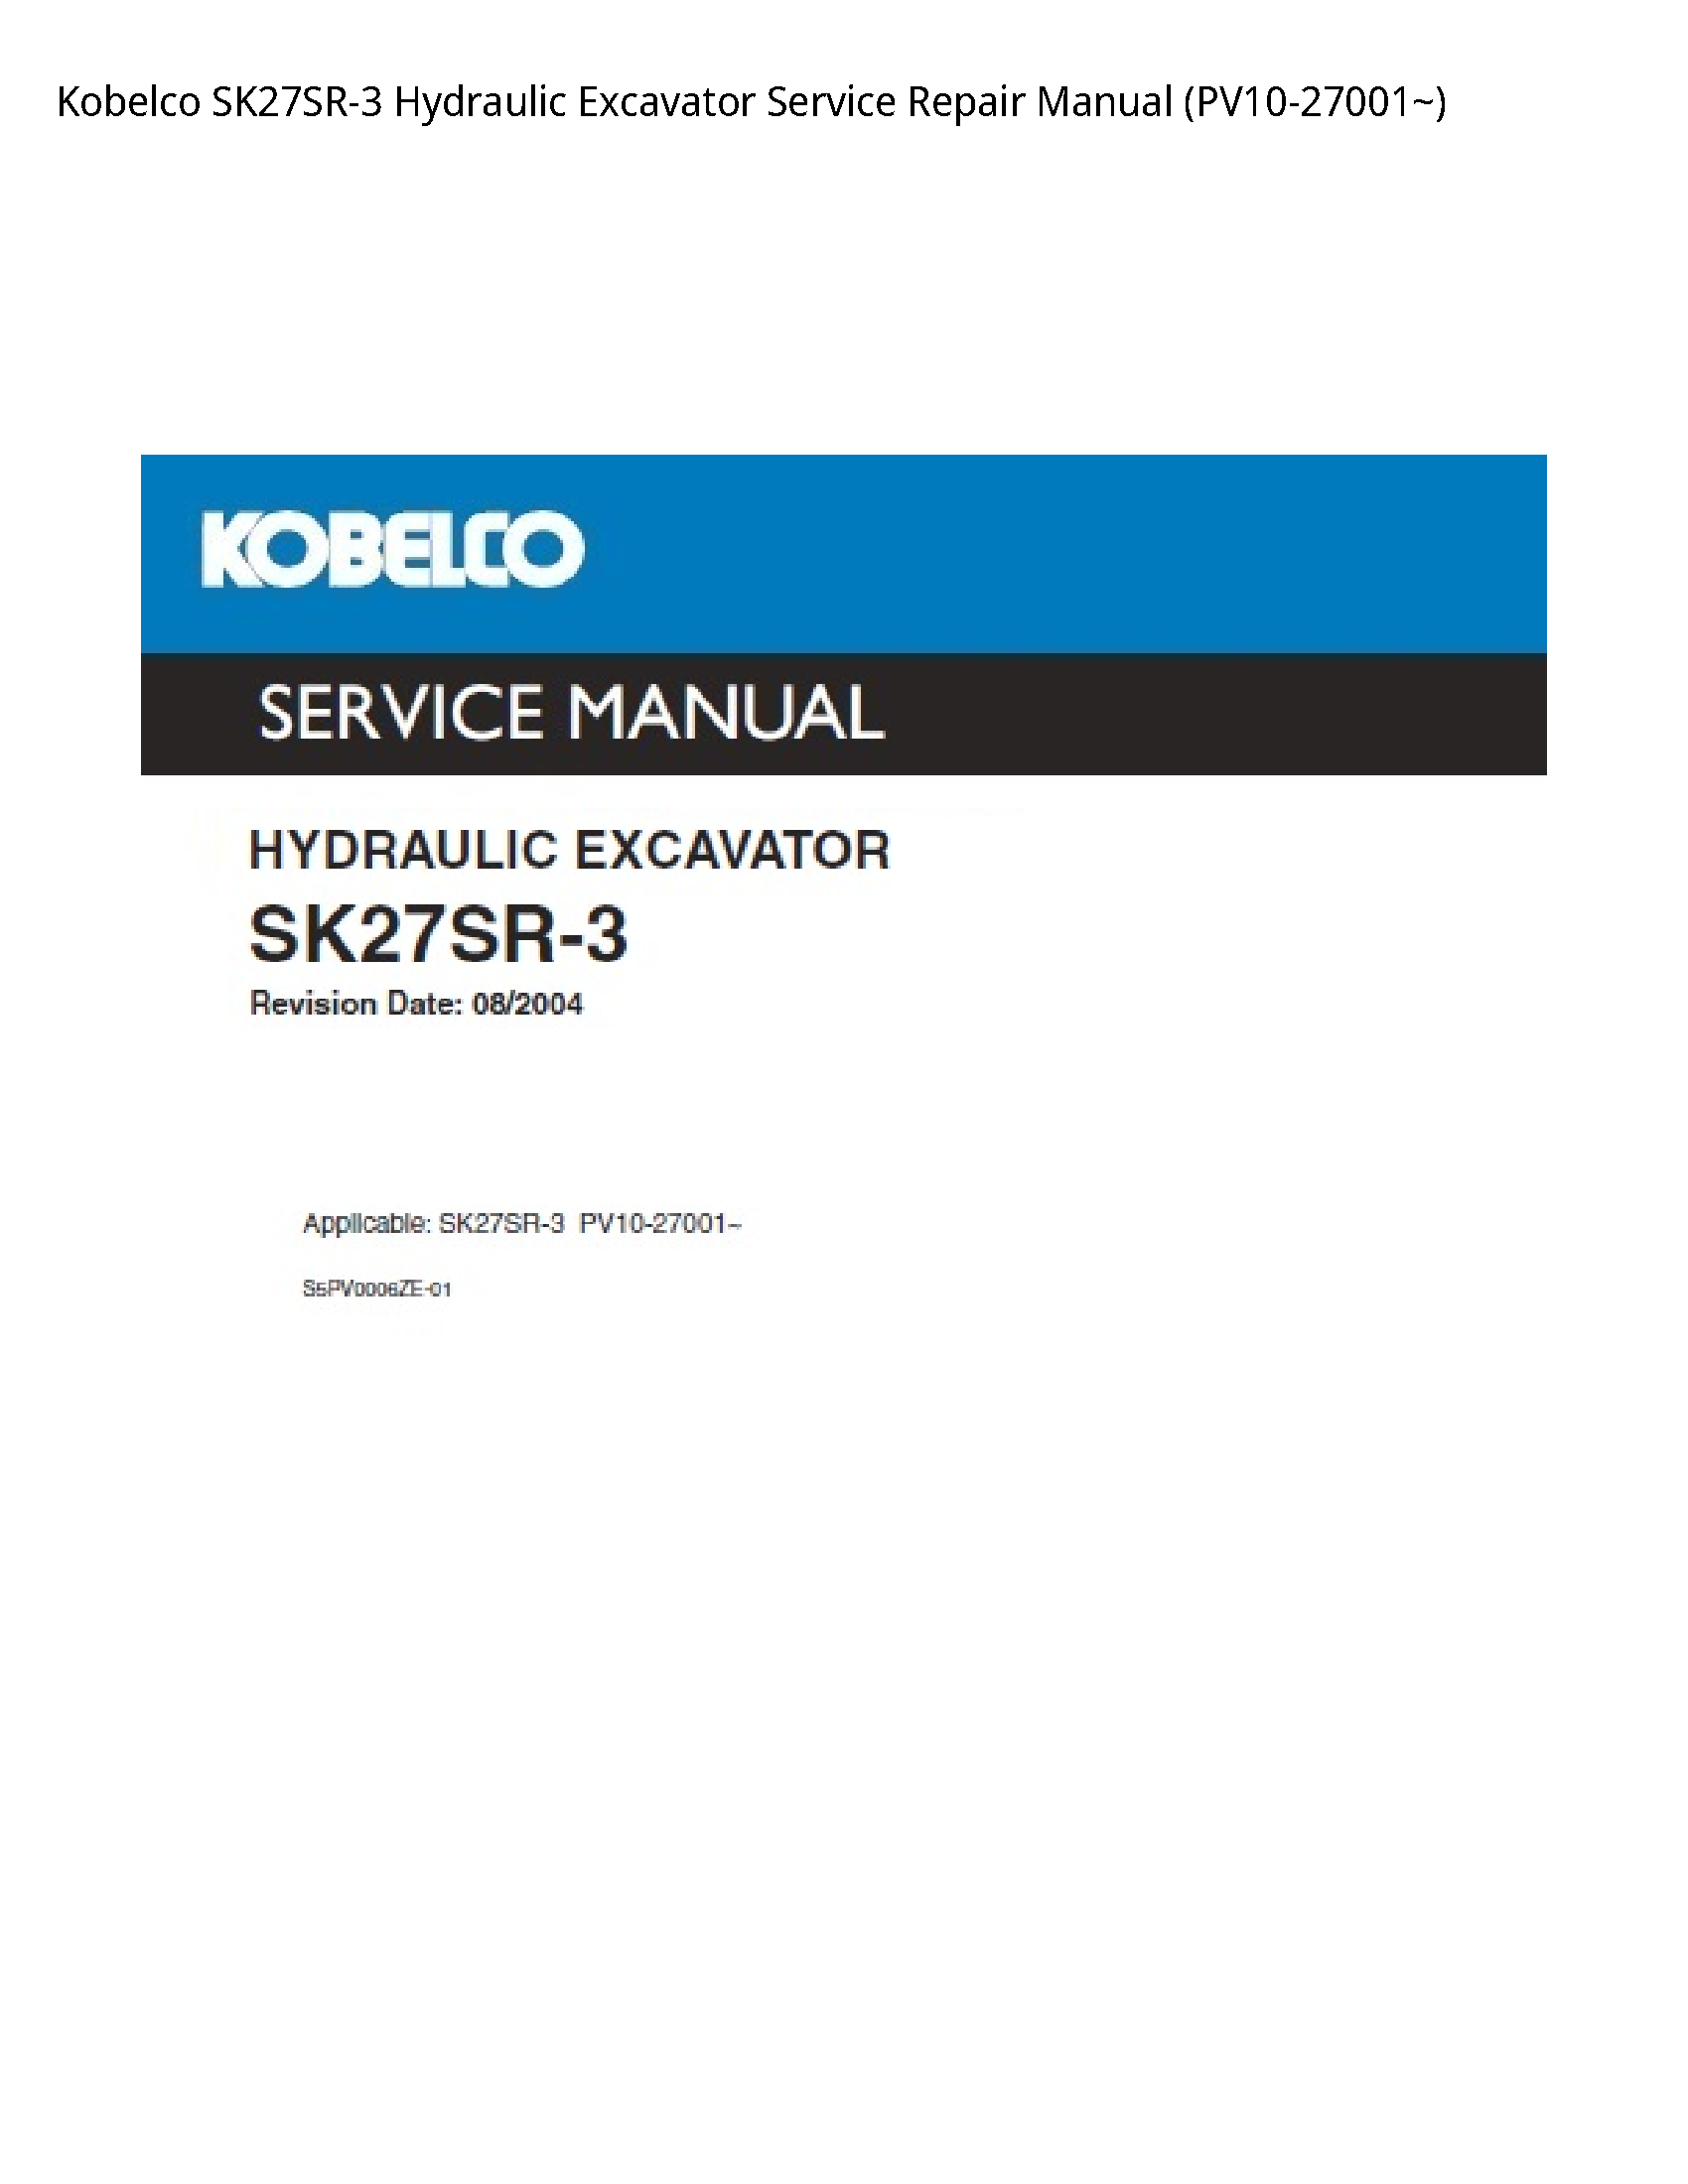 Kobelco SK27SR-3 Hydraulic Excavator manual